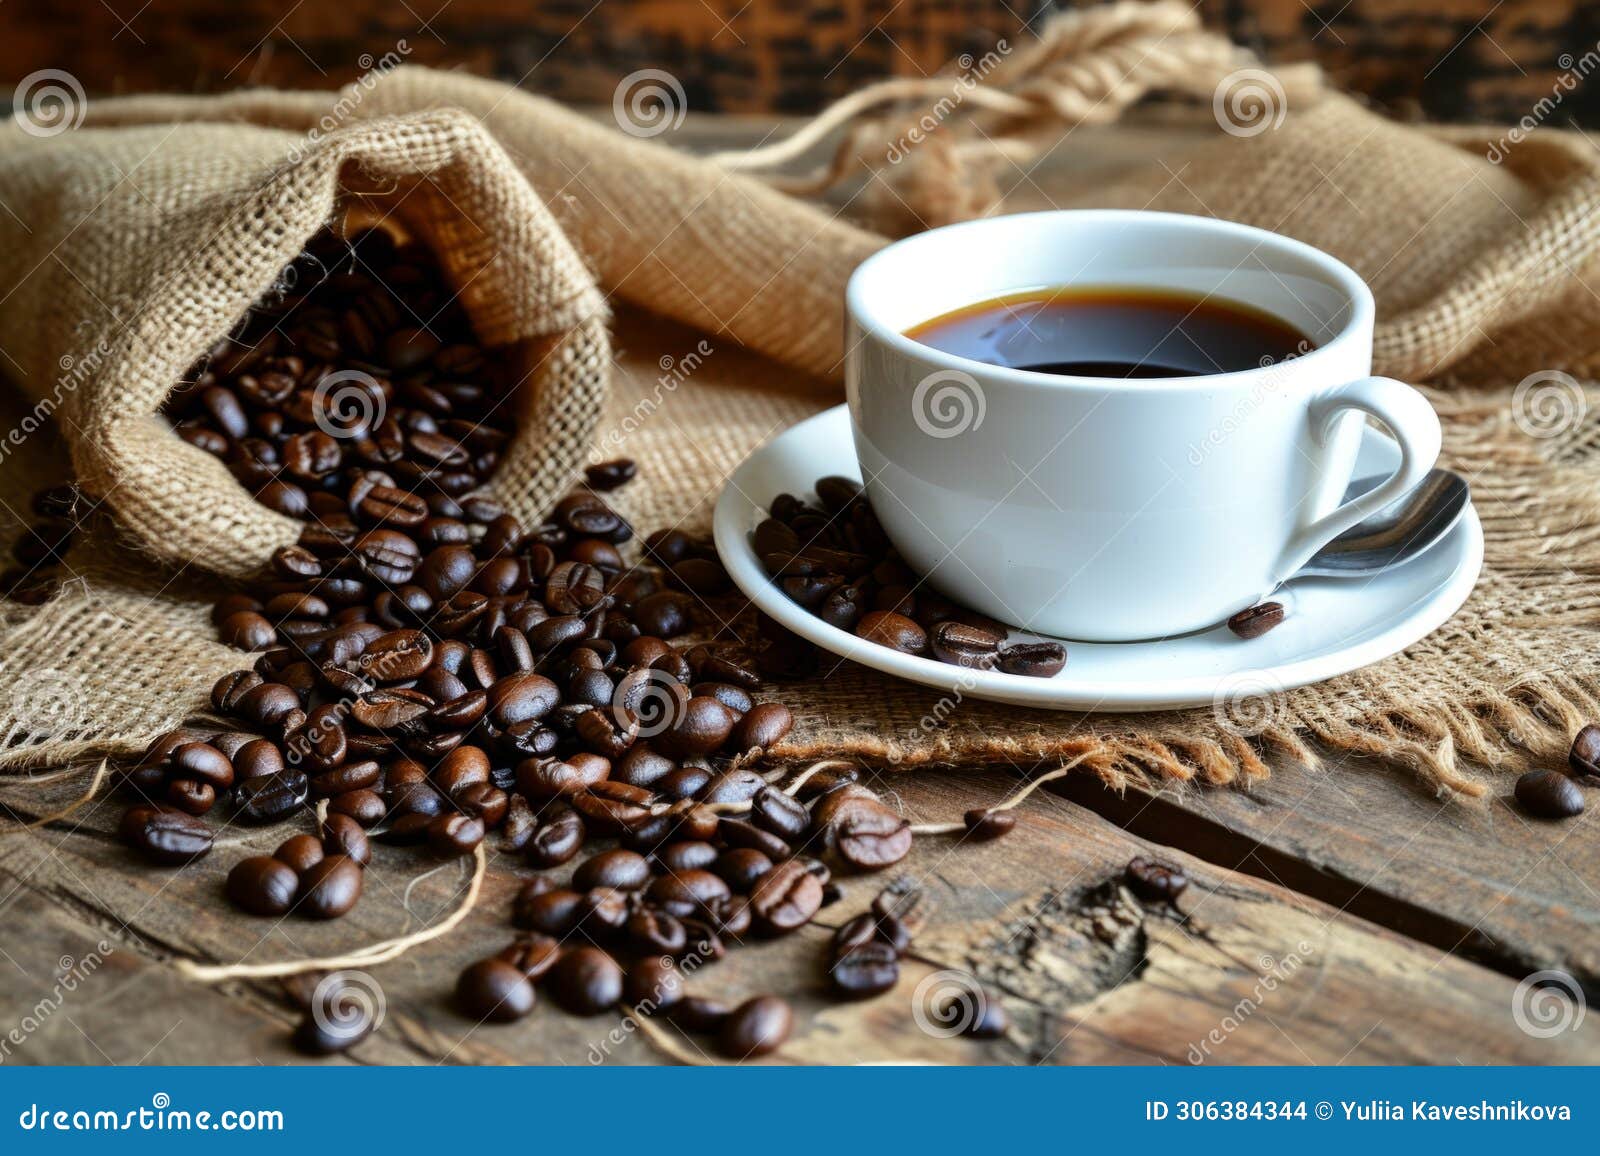 cup of specialty coffee beans cafe mug fresh spicy juicy sweet brazil caffeine decaf americano espresso with milk cream